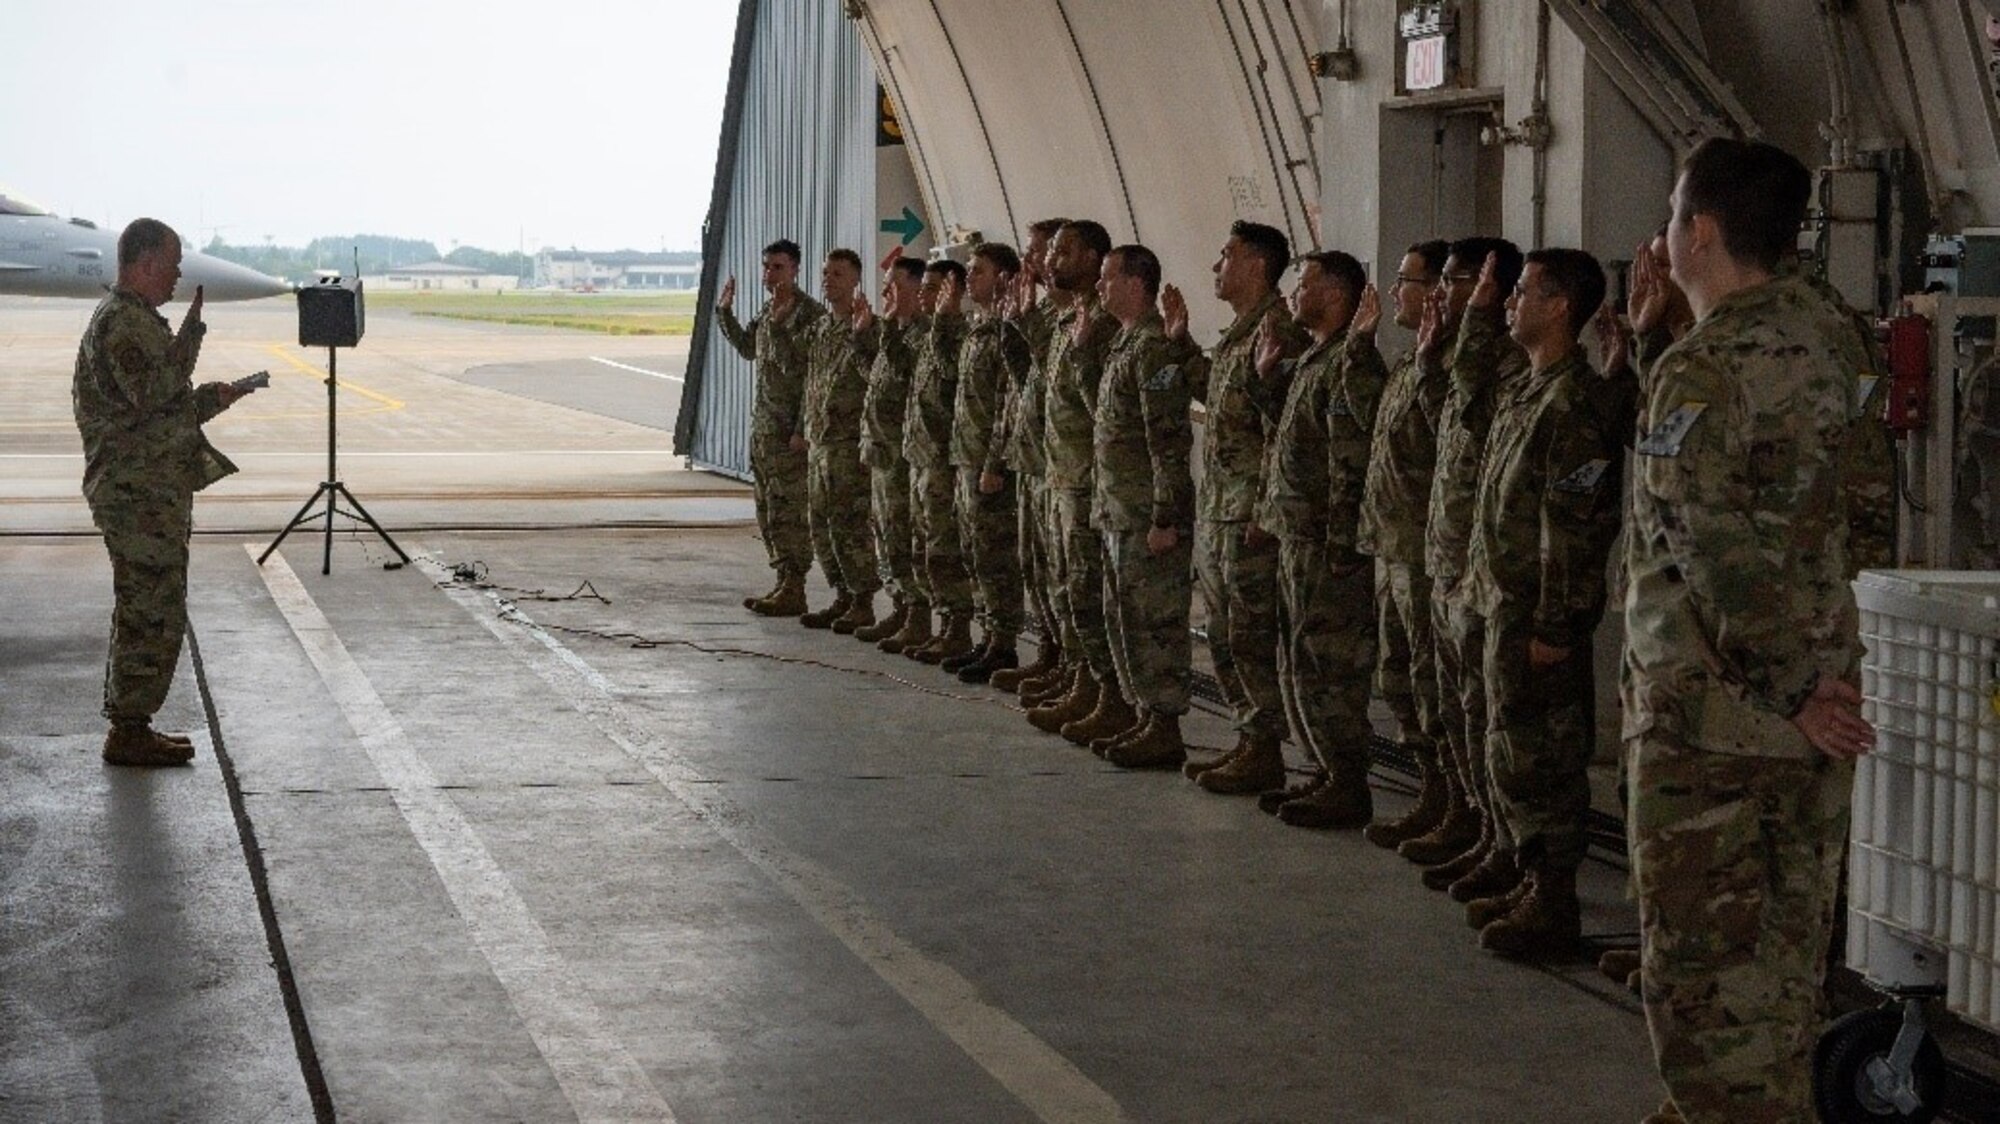 Twenty-three military members raise right hand and recite an oath.